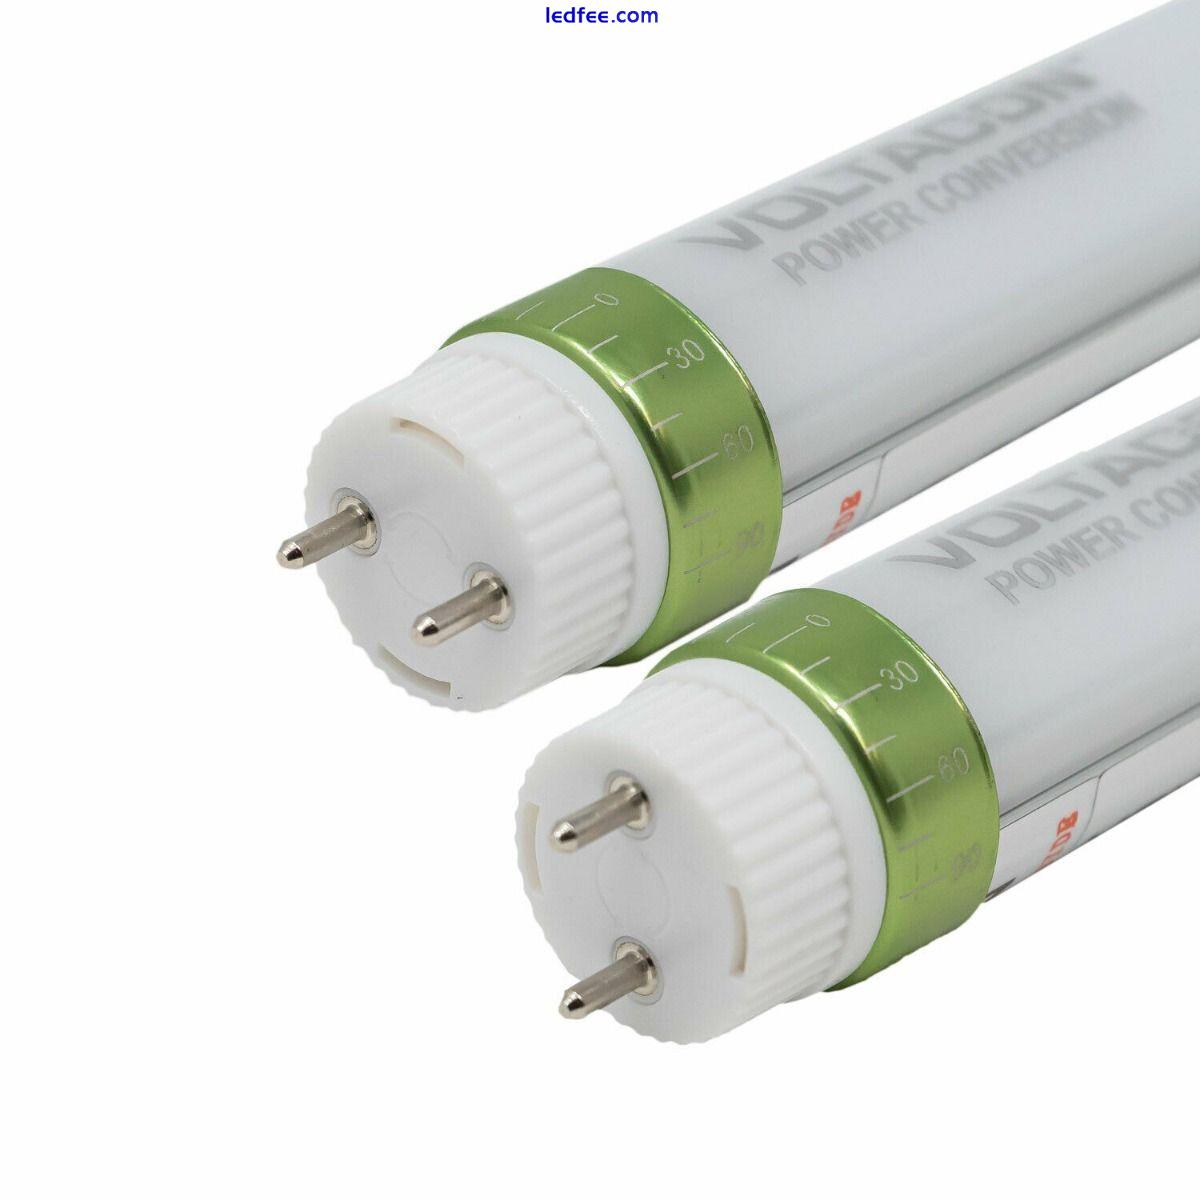 Ledison LED T8 Tube Light 60/90/120/150/180/240cm Direct Replacement for CFL 0 